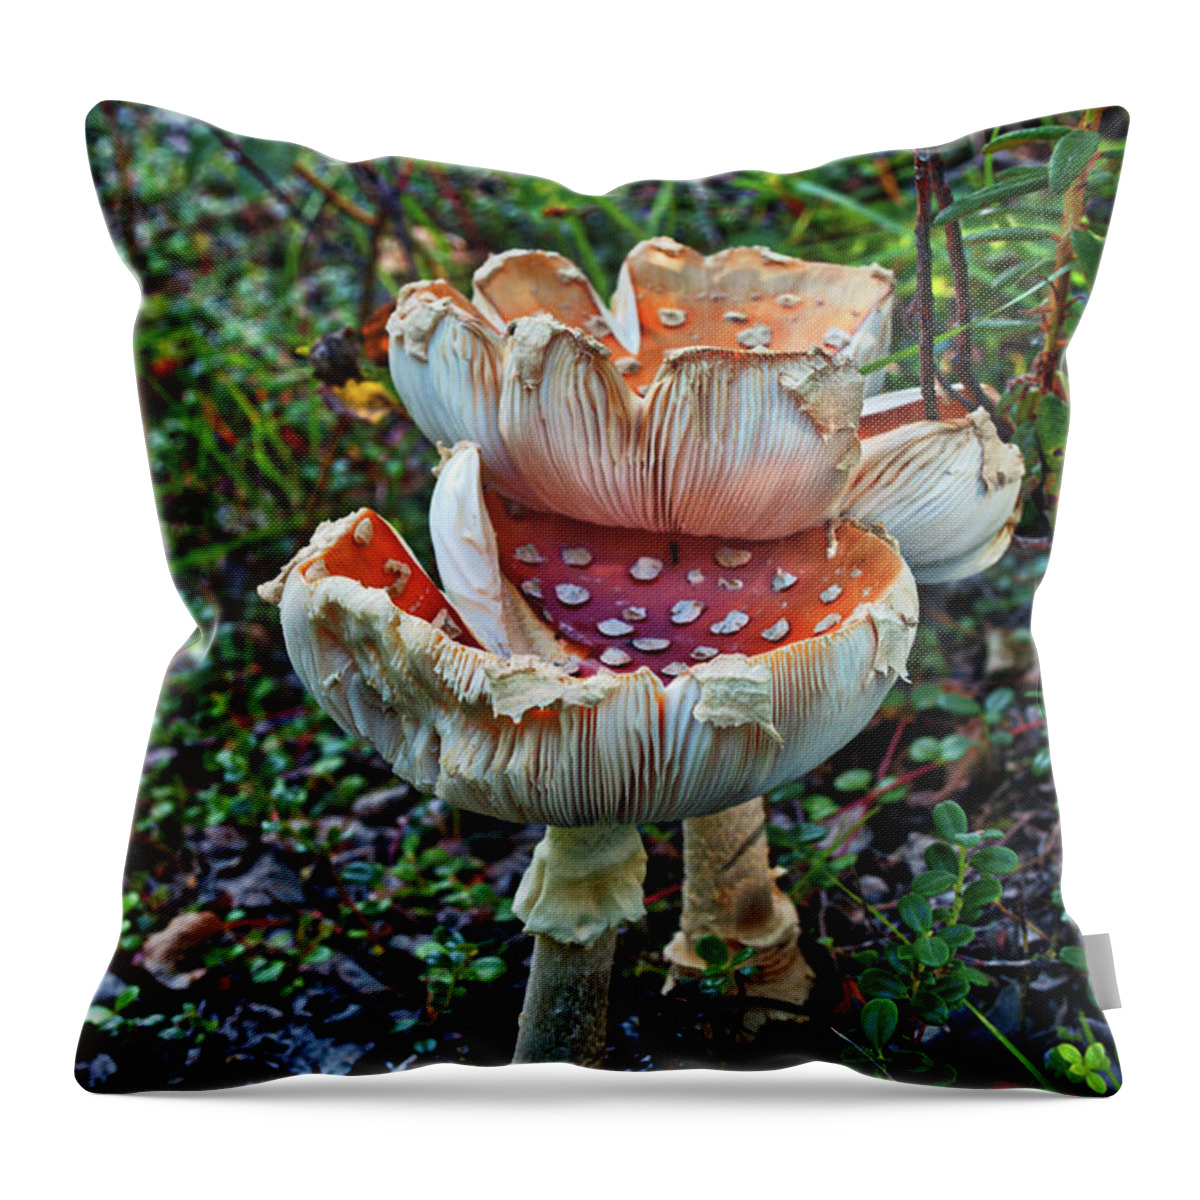 Mushroom Throw Pillow featuring the photograph Mushroom Gills by Cathy Mahnke